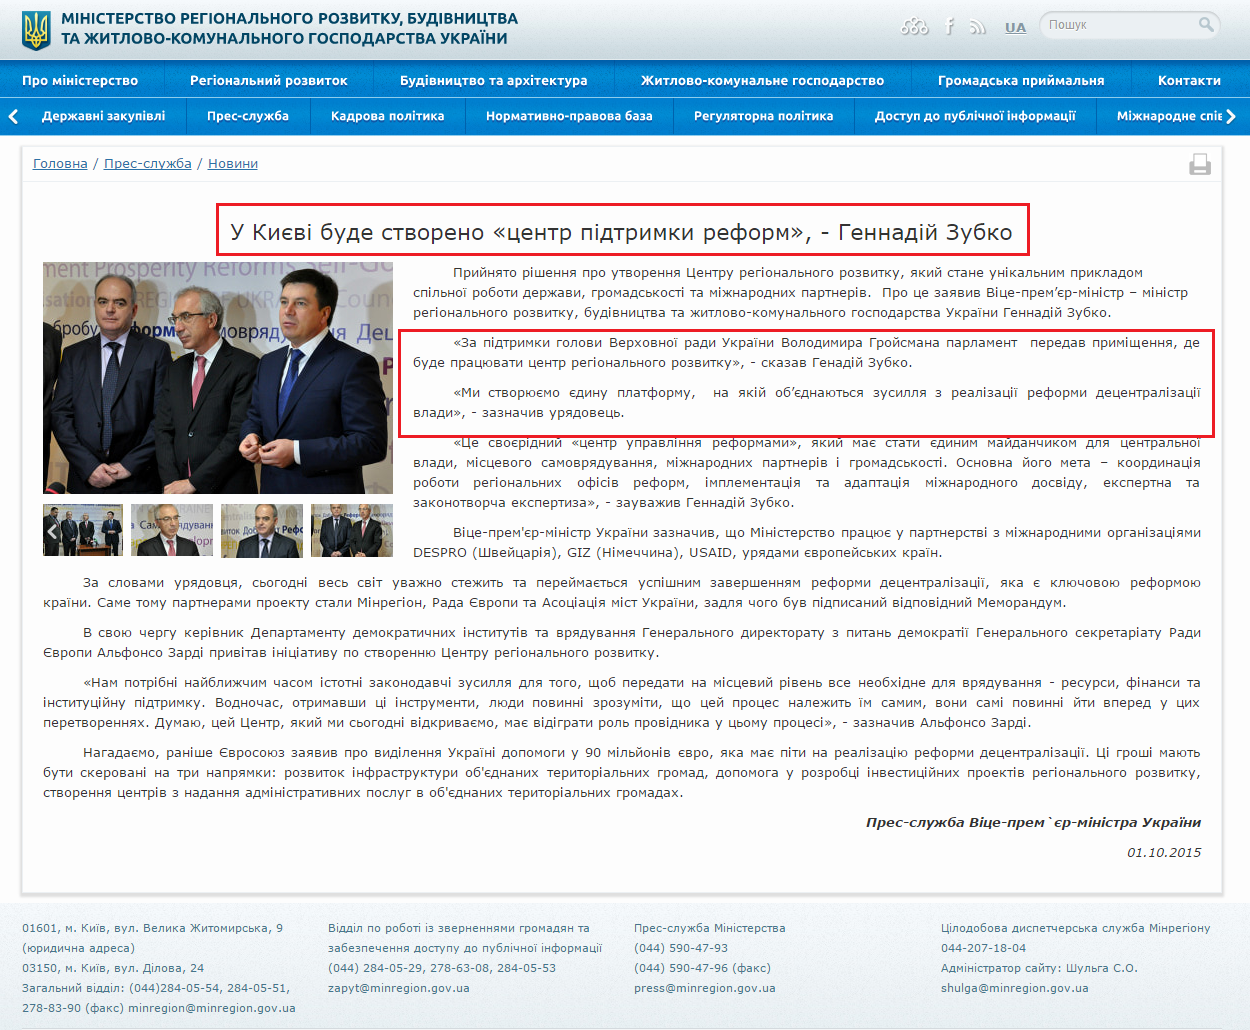 http://www.minregion.gov.ua/news/u-kievi-bude-stvoreno-centr-pidtrimki-reform---gennadiy-zubko-122970/